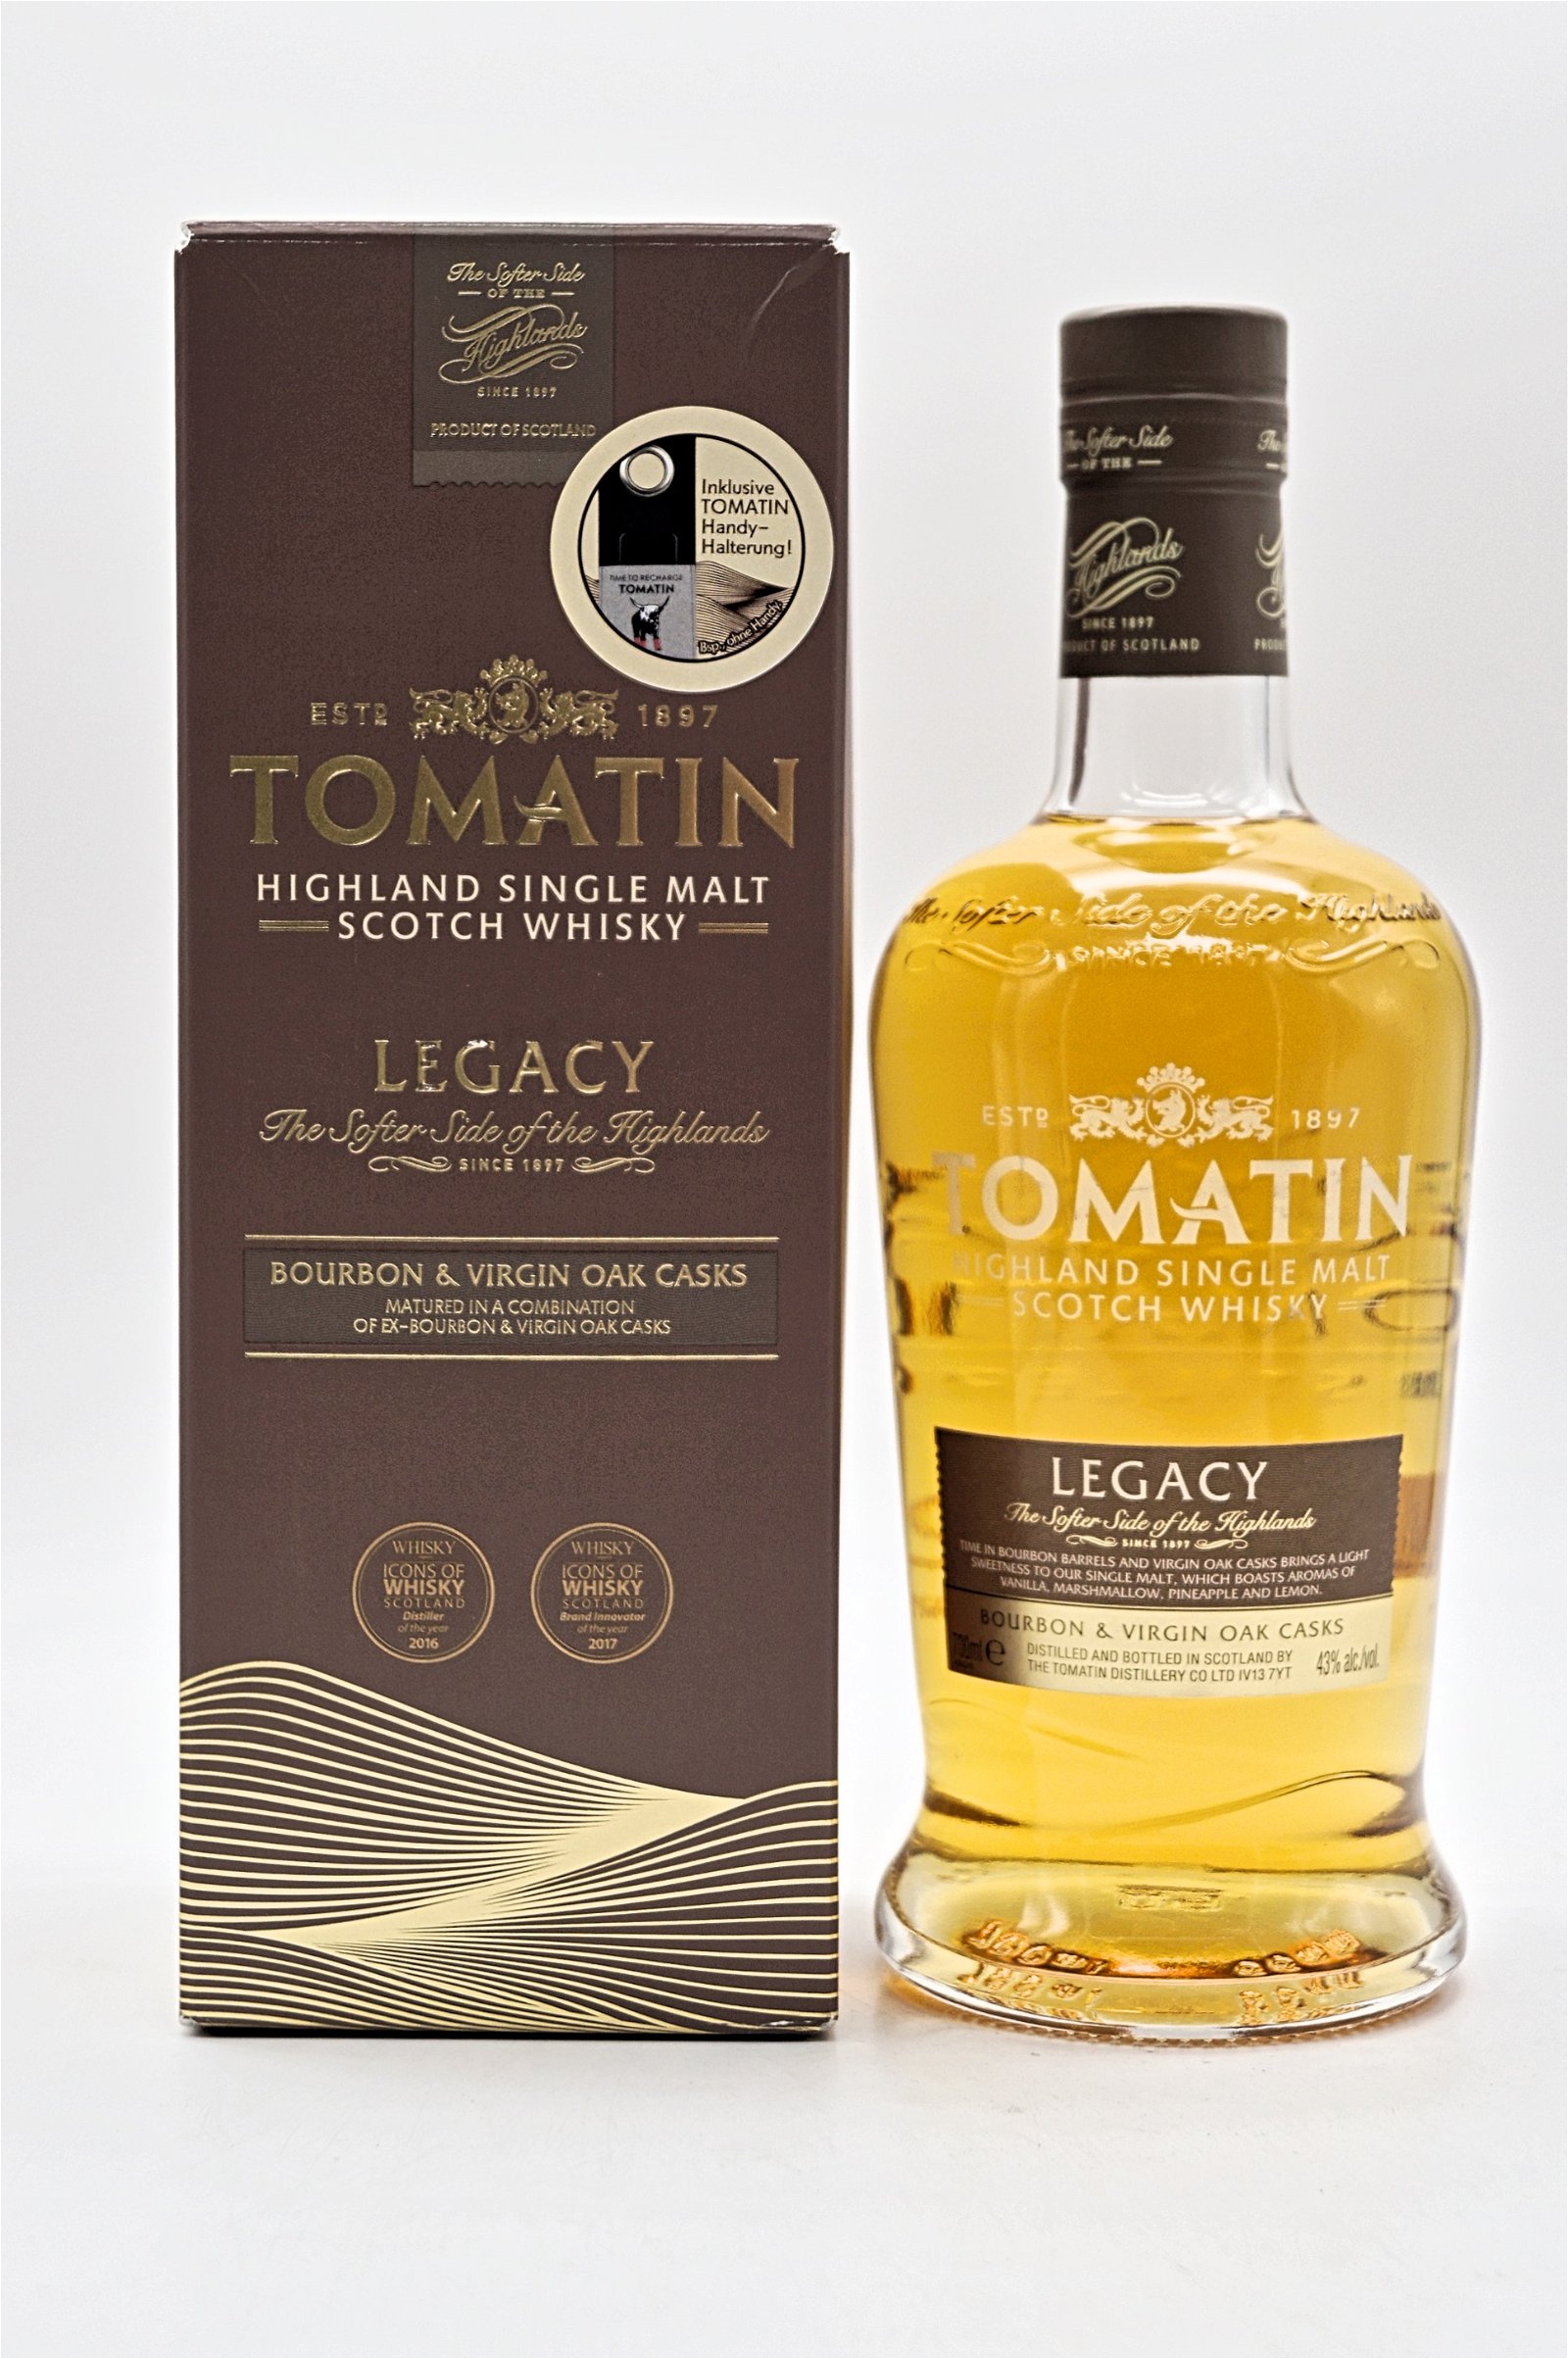 Legacy Single Whisky Scotch Highland Tomatin Malt